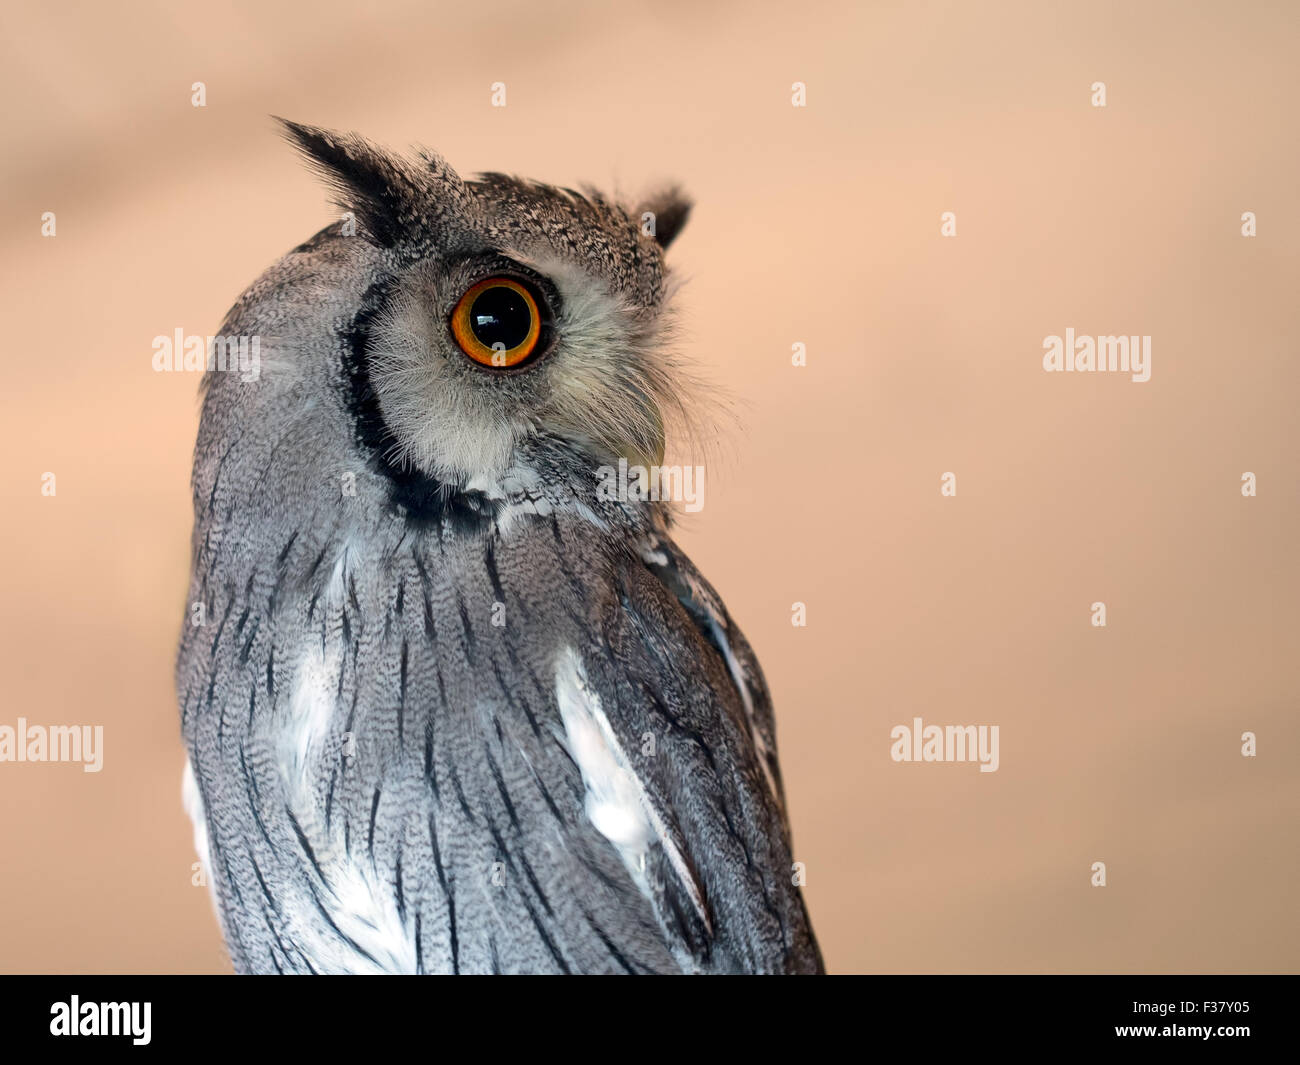 Small bird of prey. White faced Scops owl. Aka the Transformer owl. Stock Photo